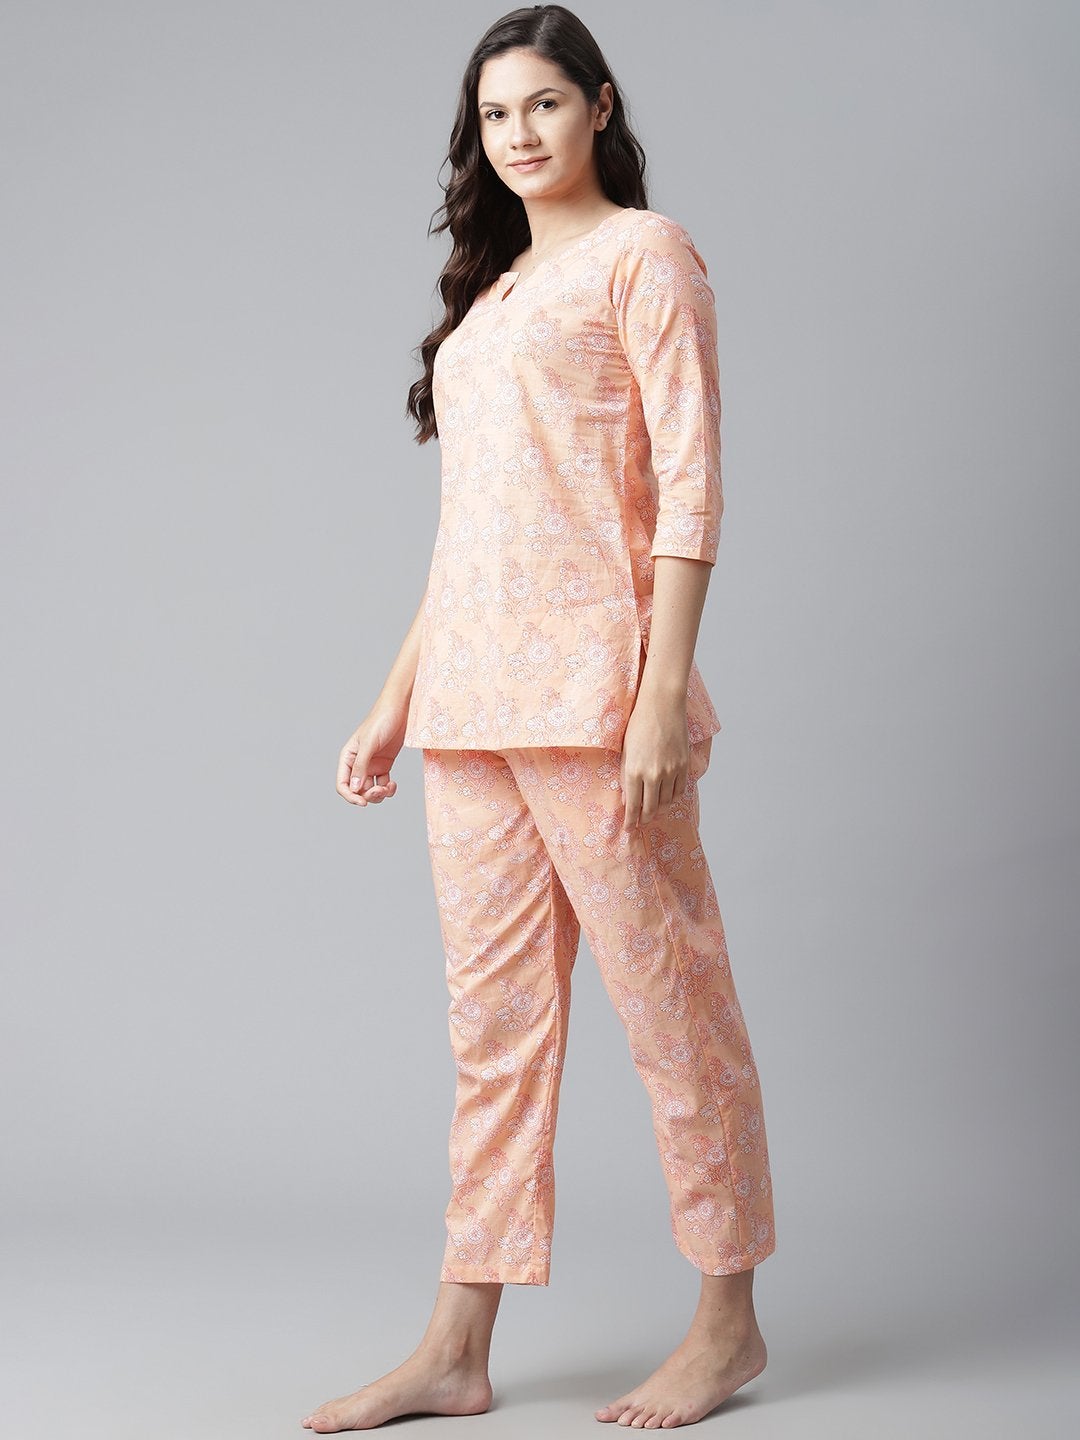 Women's Peach Printed Cotton Nightwear - Divena